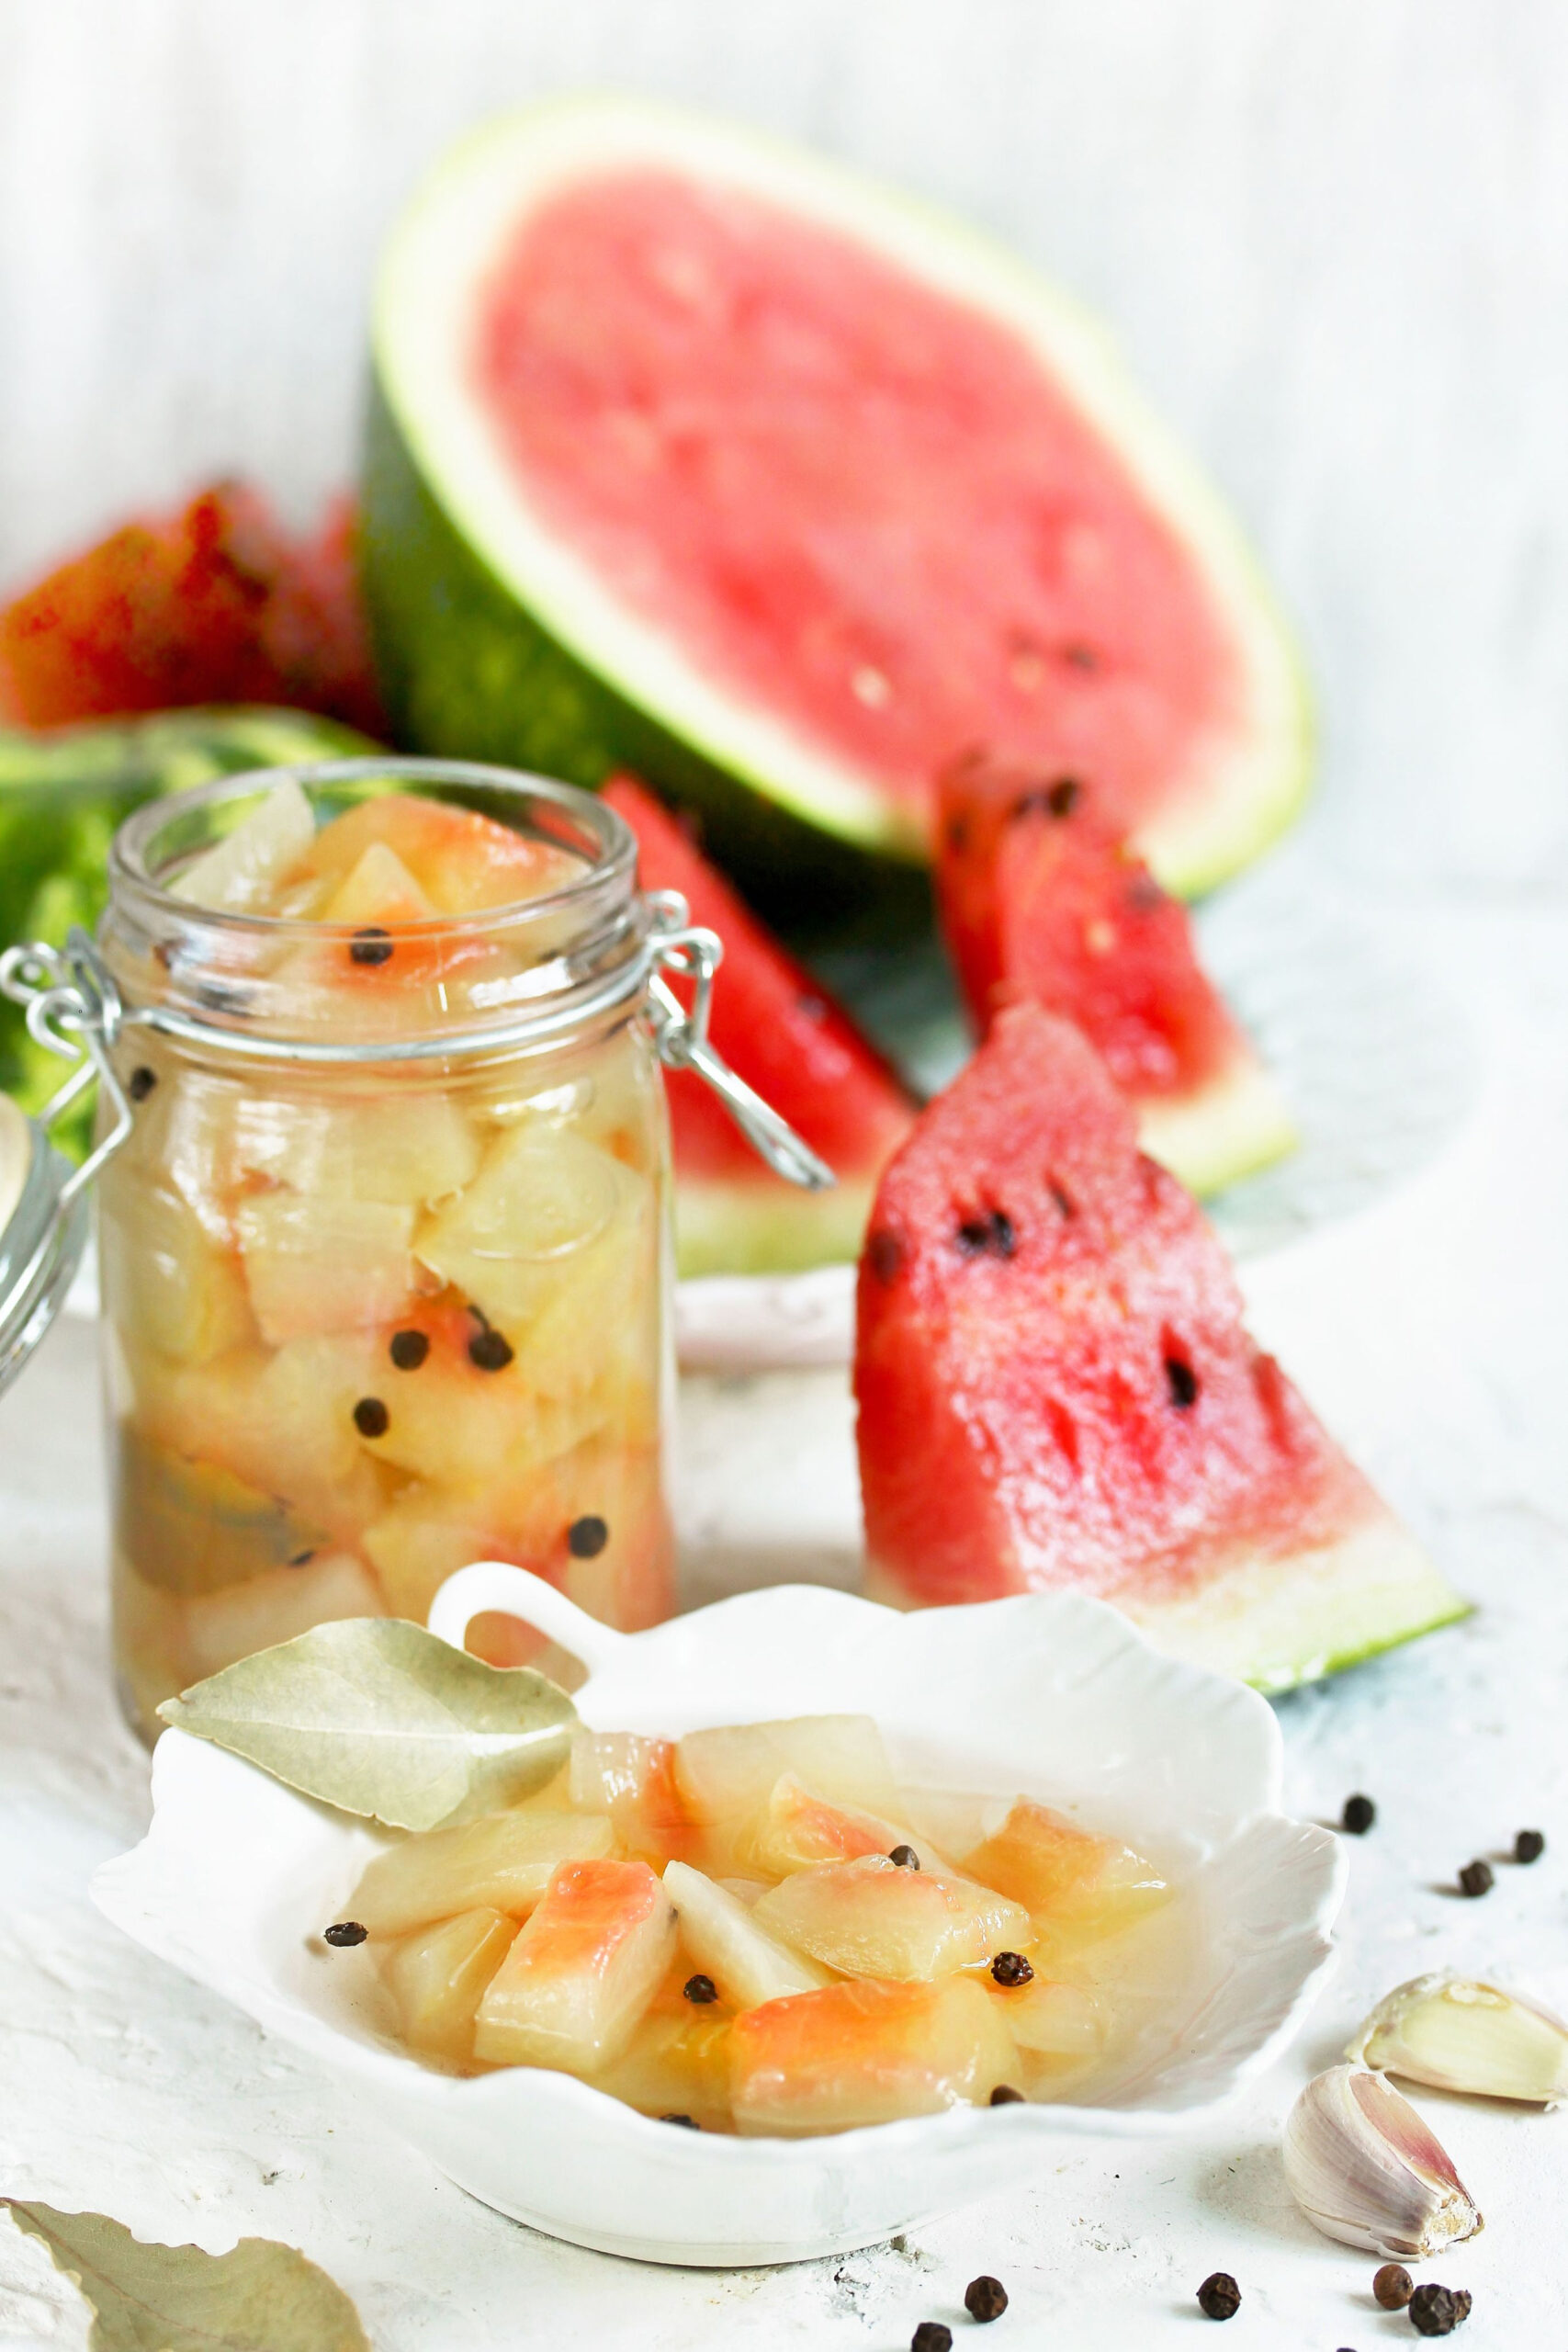 watermelon rind pickles in dish and jar watermelon alongside